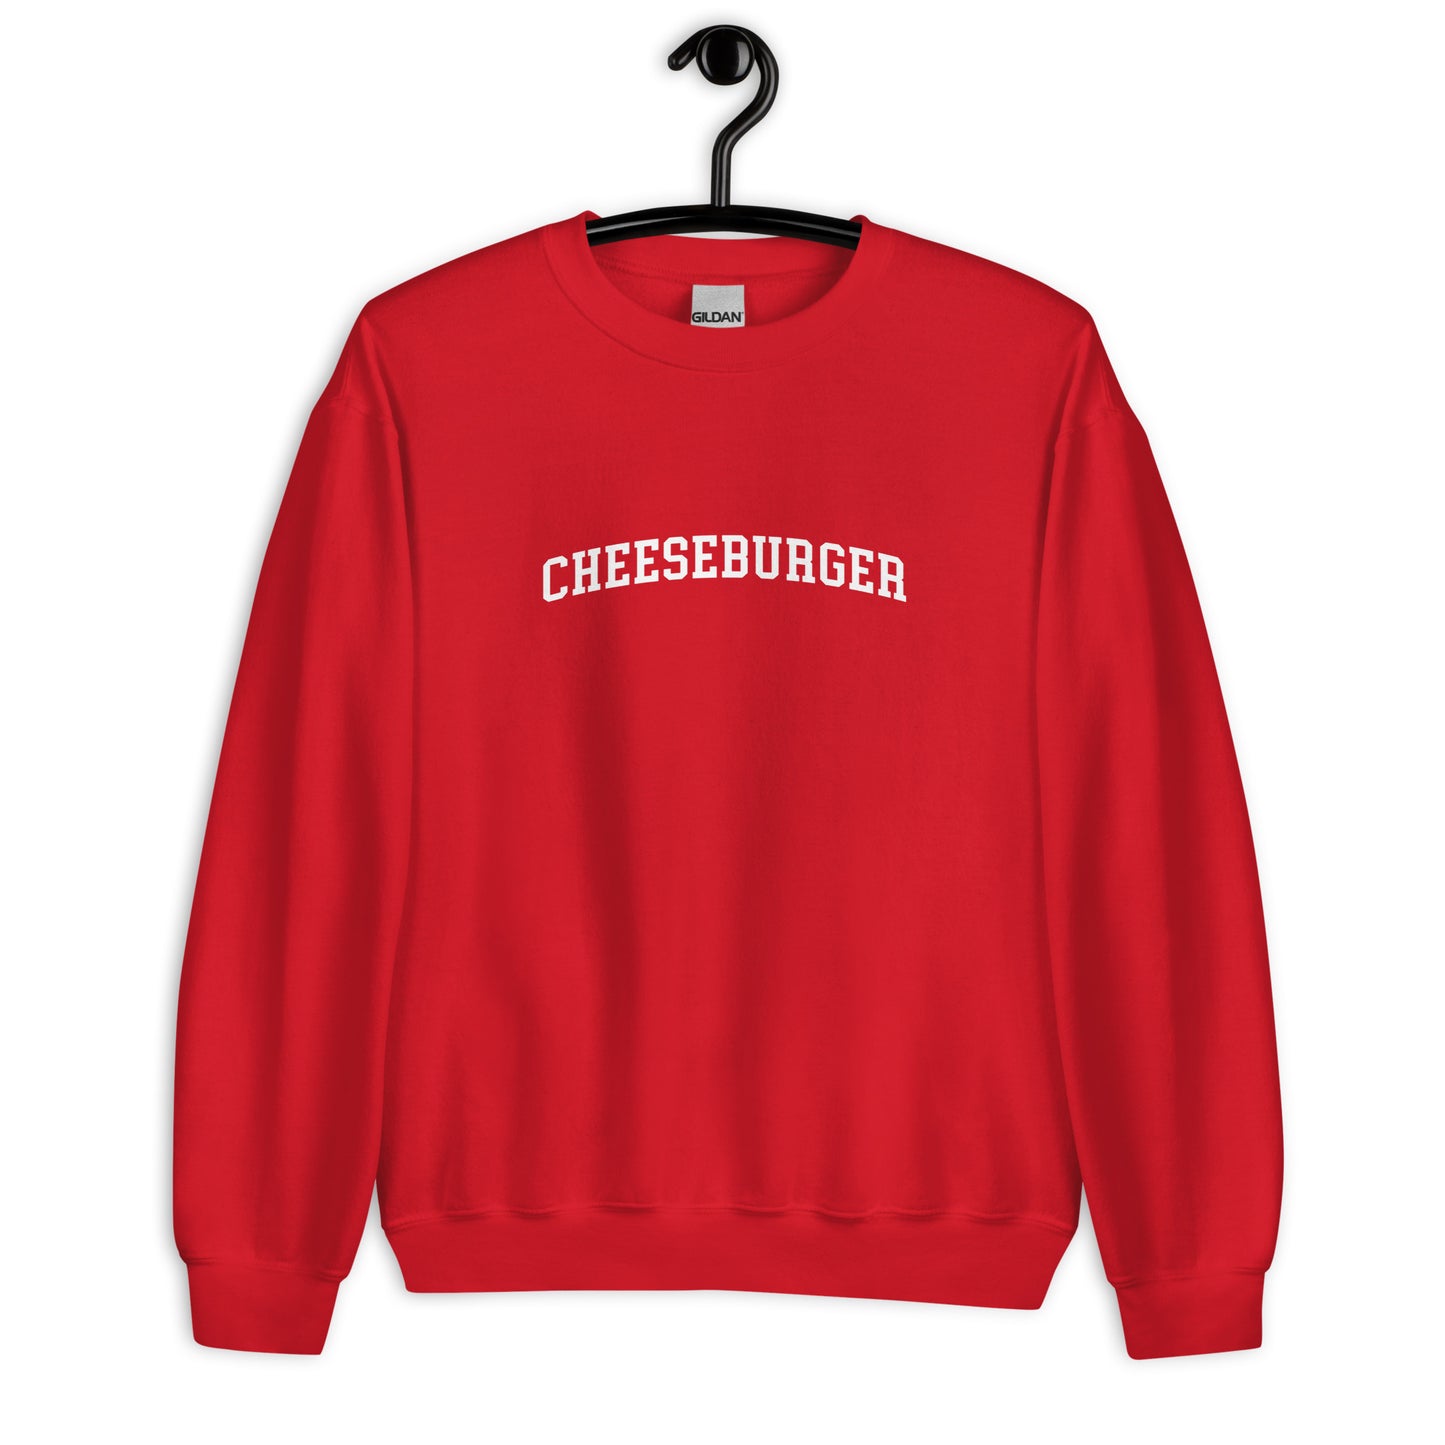 Cheeseburger Sweatshirt - Arched Font